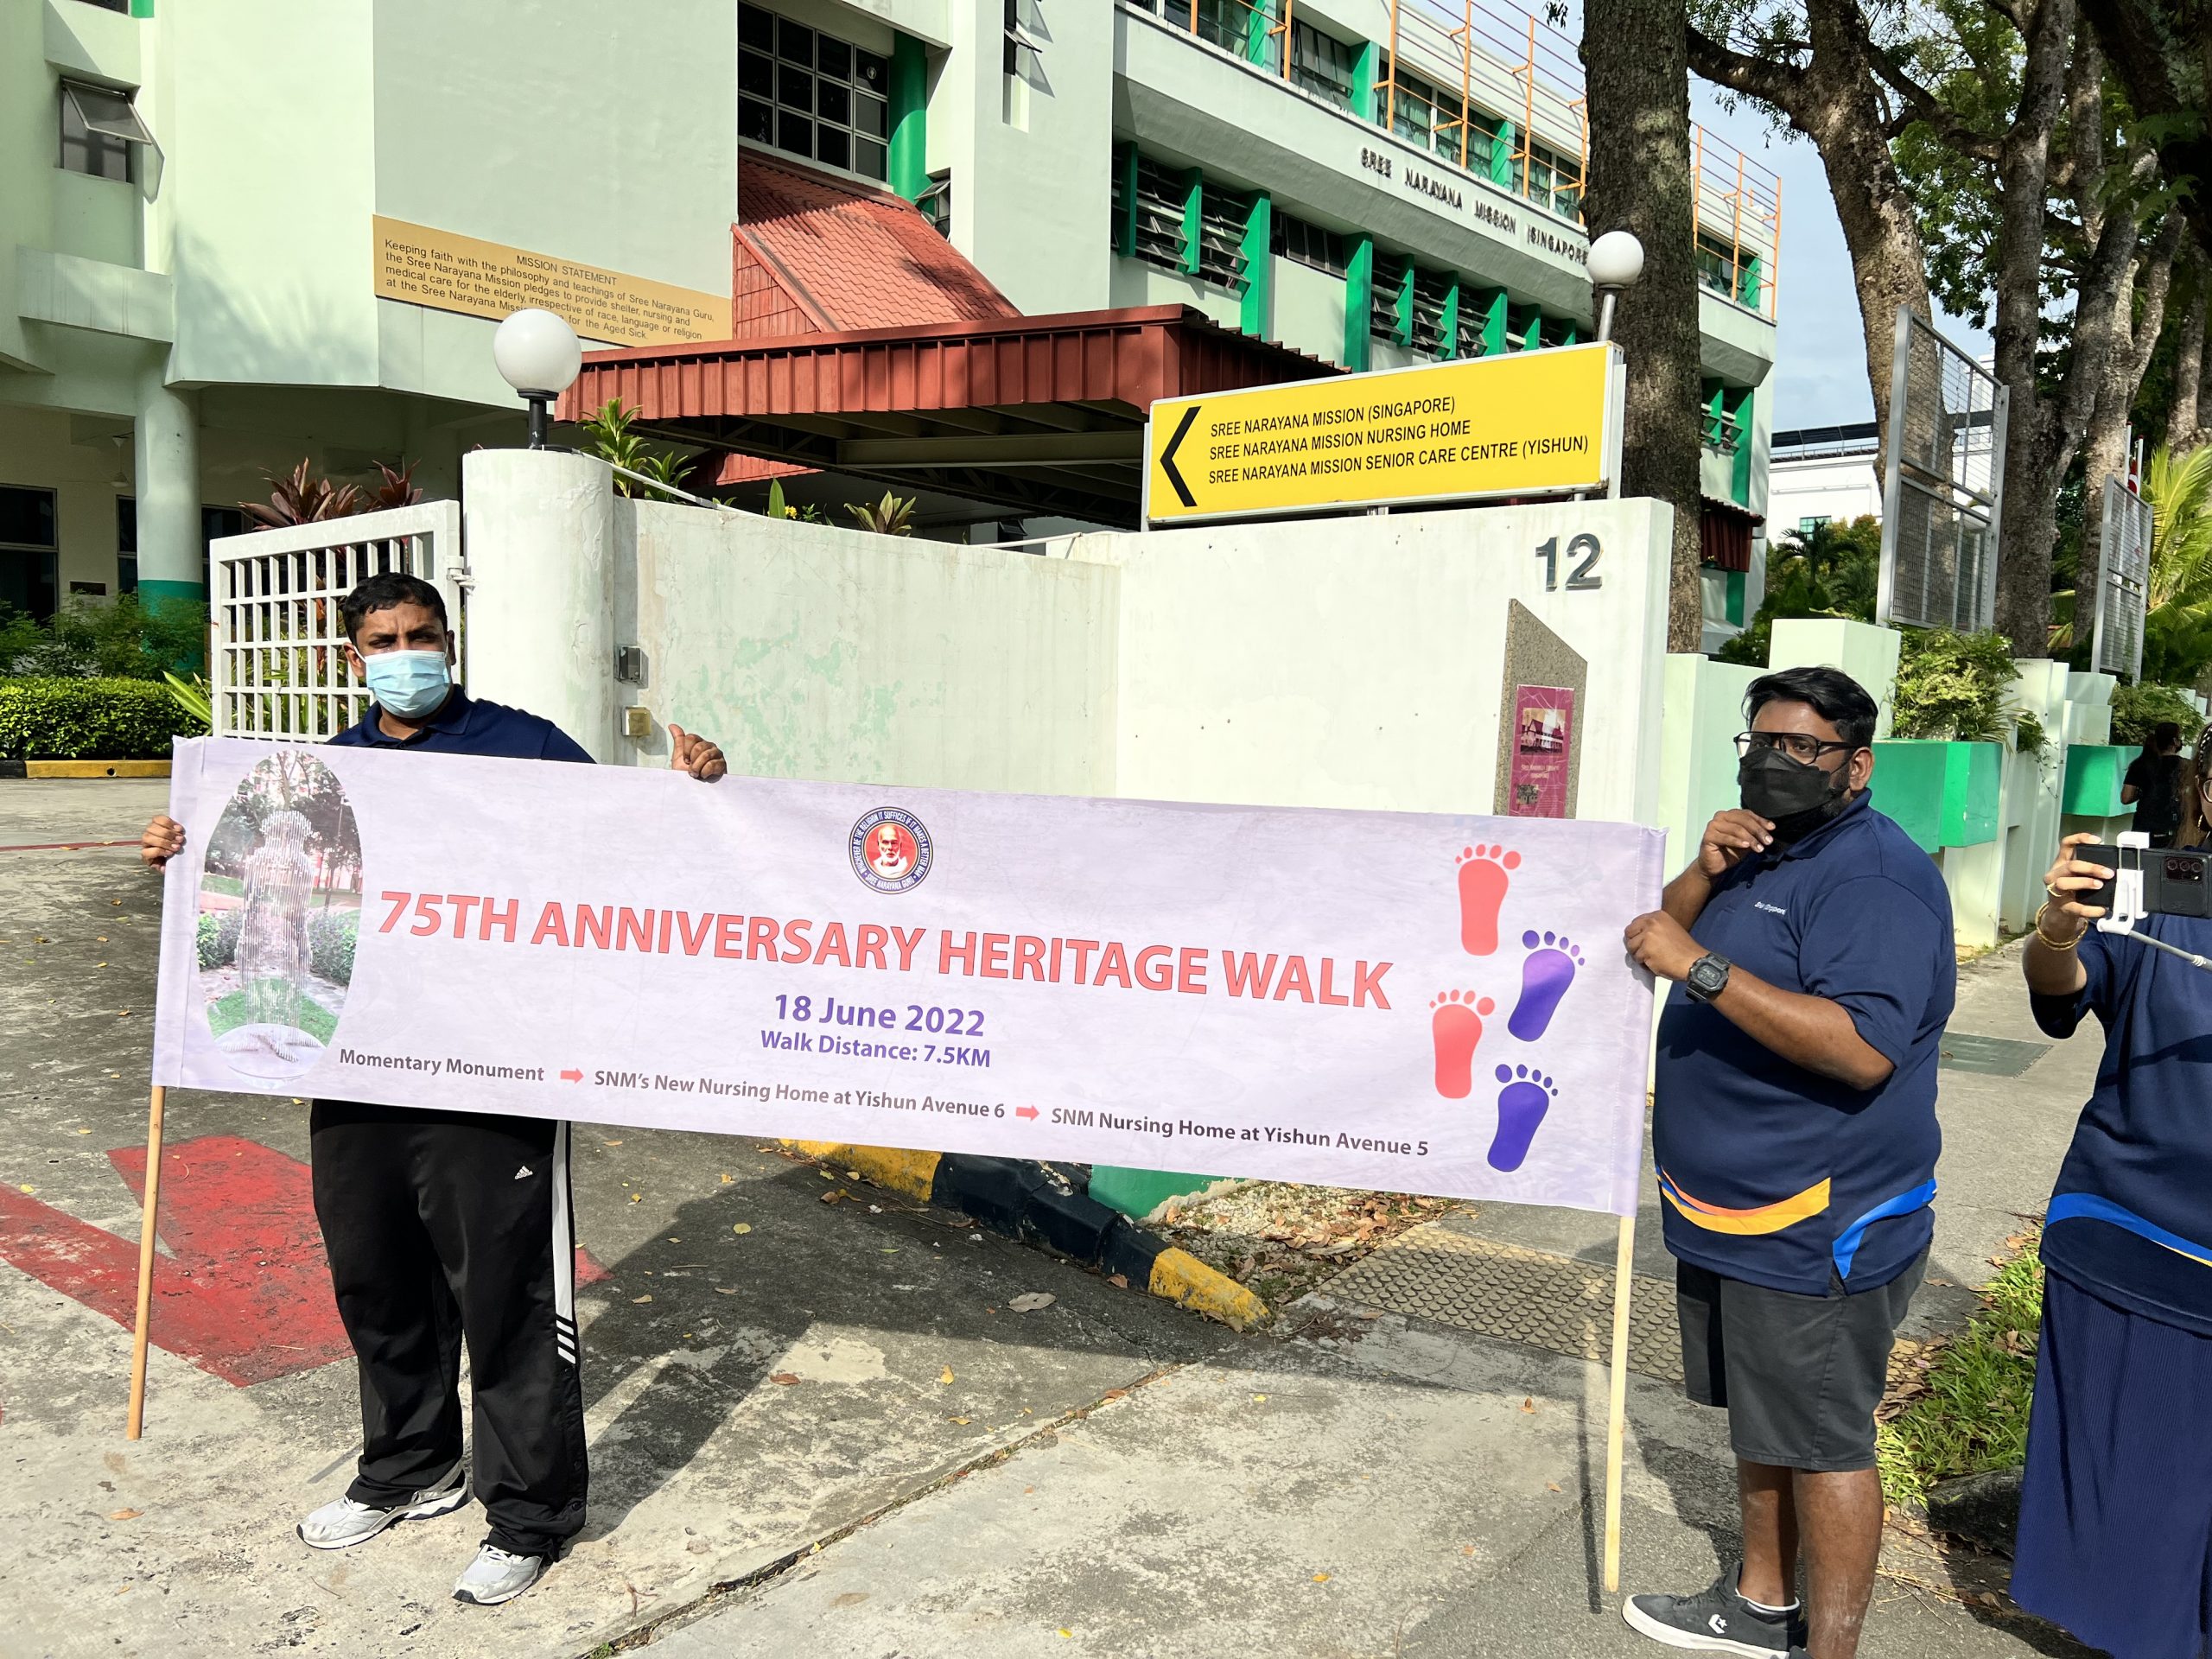 SNM’s 75th Anniversary Heritage Walk